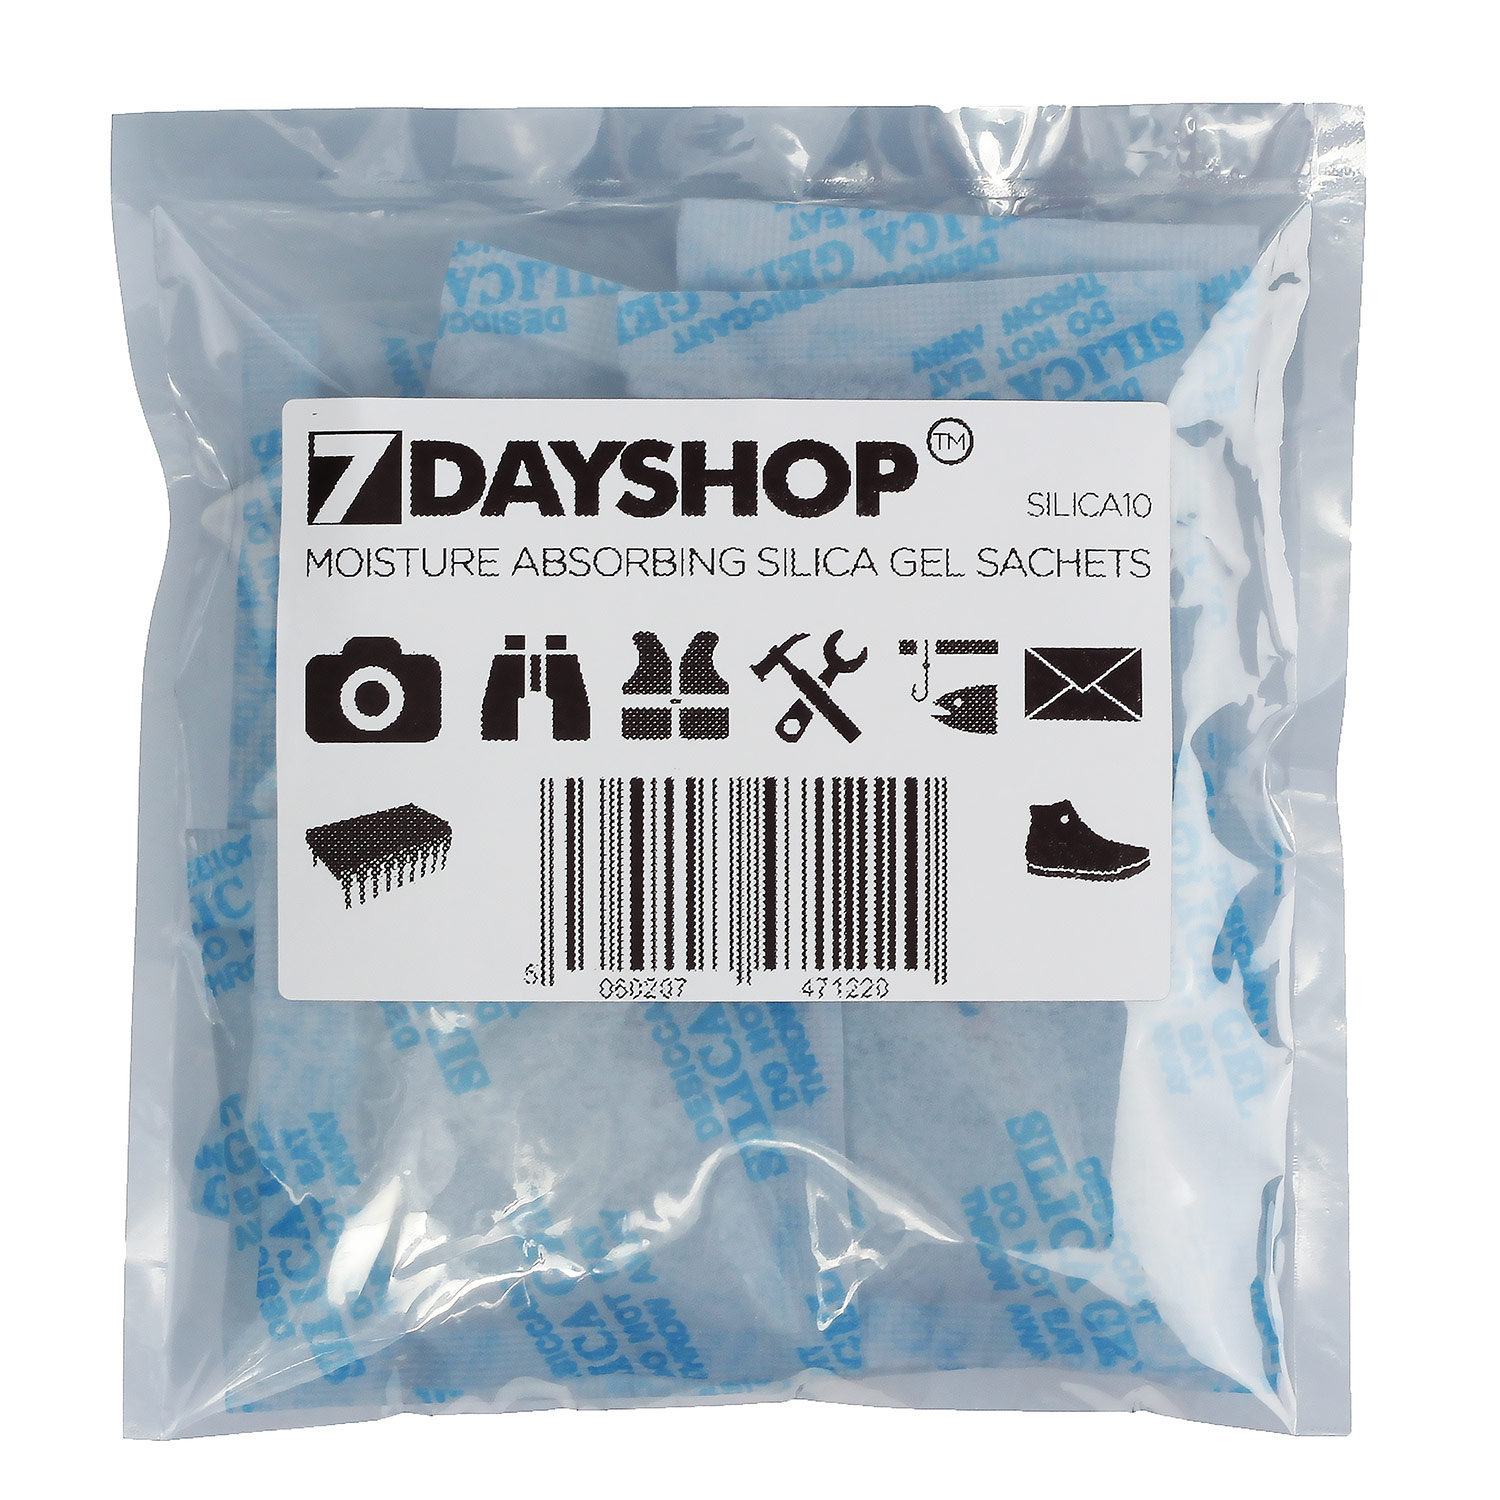 7dayshop Silica Gel Moisture Absorbing Dehumidifier Sachets, Packs, Bags: 10g Bag - 10 Pack